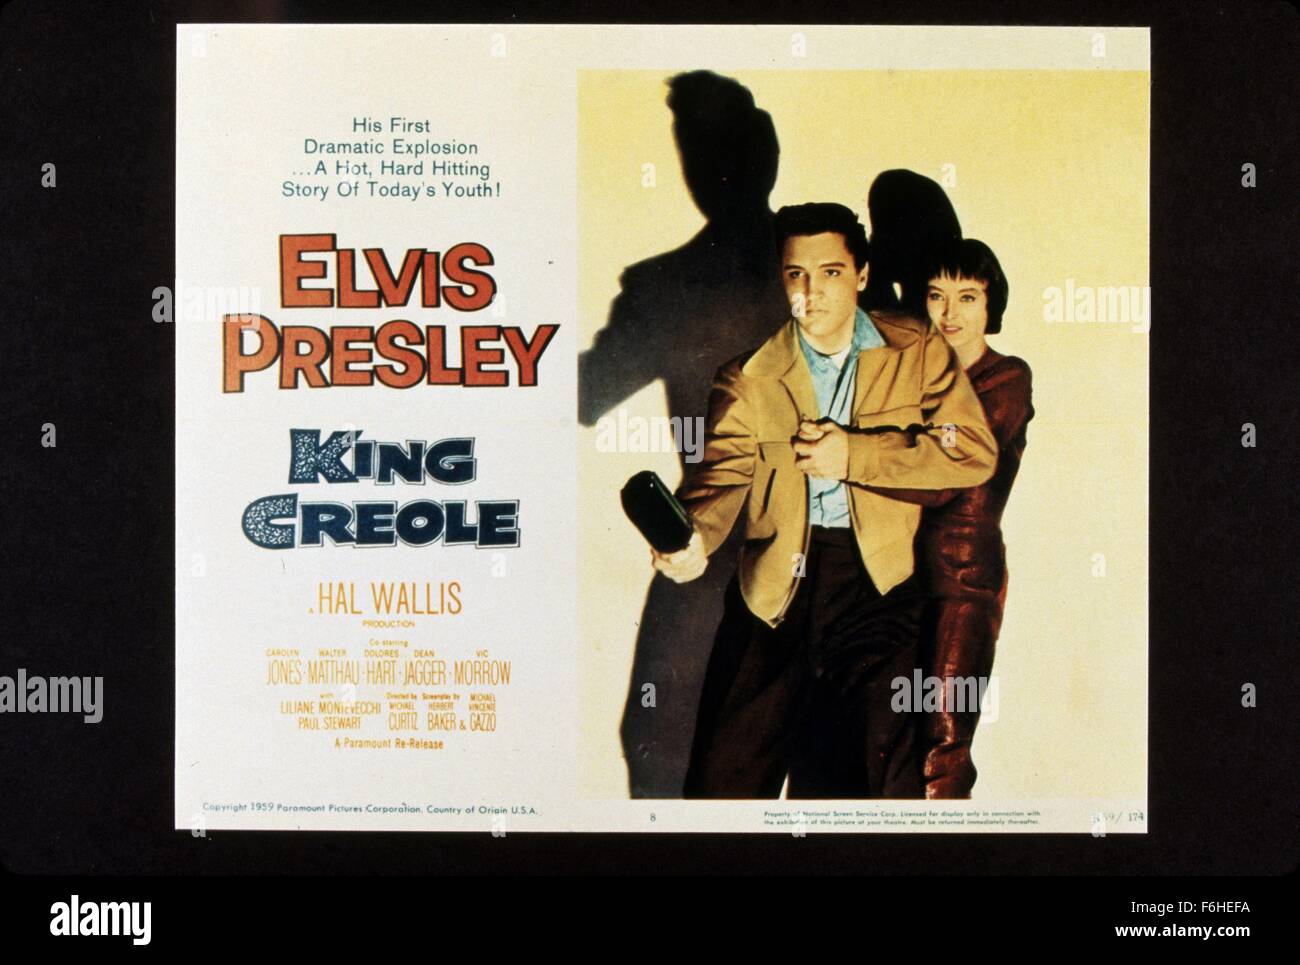 1958, Film Title: KING CREOLE, Director: MICHAEL CURTIZ, Studio: PARAMOUNT, Pictured: MICHAEL CURTIZ, CAROLYN JONES, ELVIS PRESLEY. (Credit Image: SNAP) Stock Photo